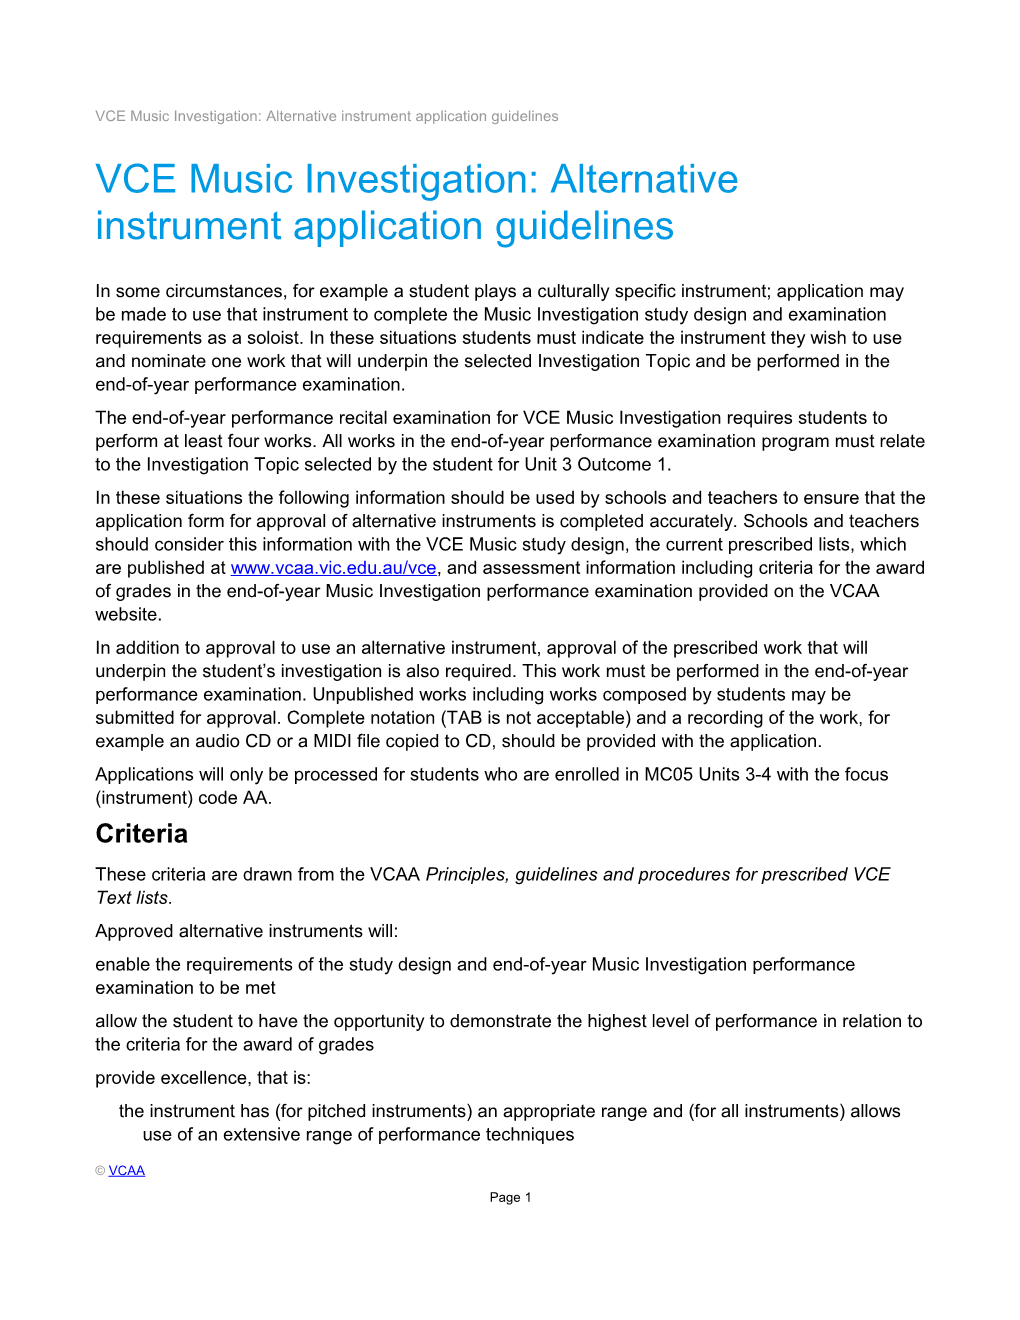 VCE Music Investigation: Alternative Instrument Application Guidelines